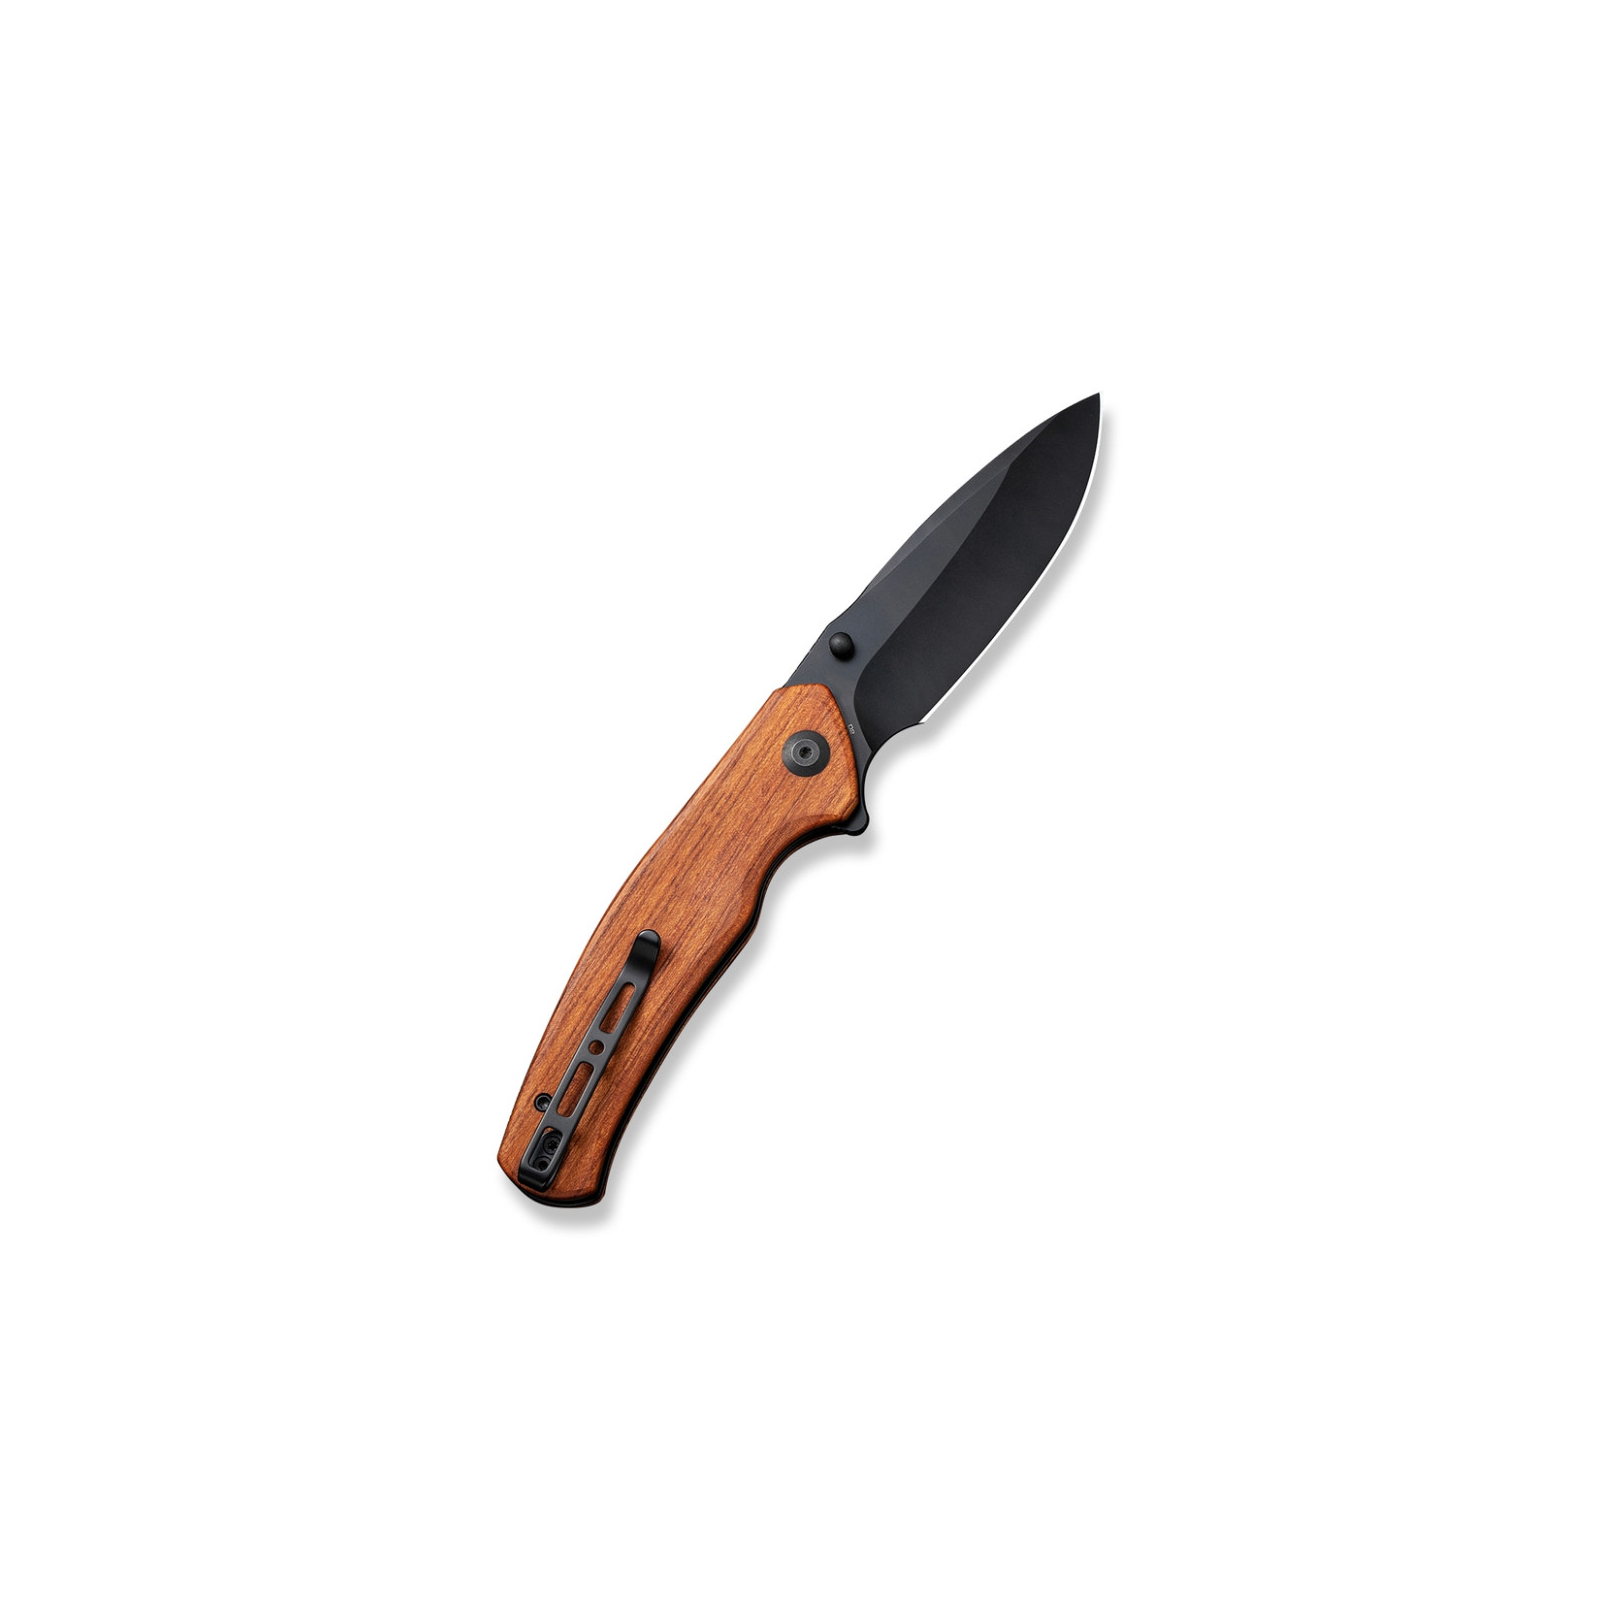 Нож Sencut Slashkin Satin Black G10 (S20066-1) изображение 2